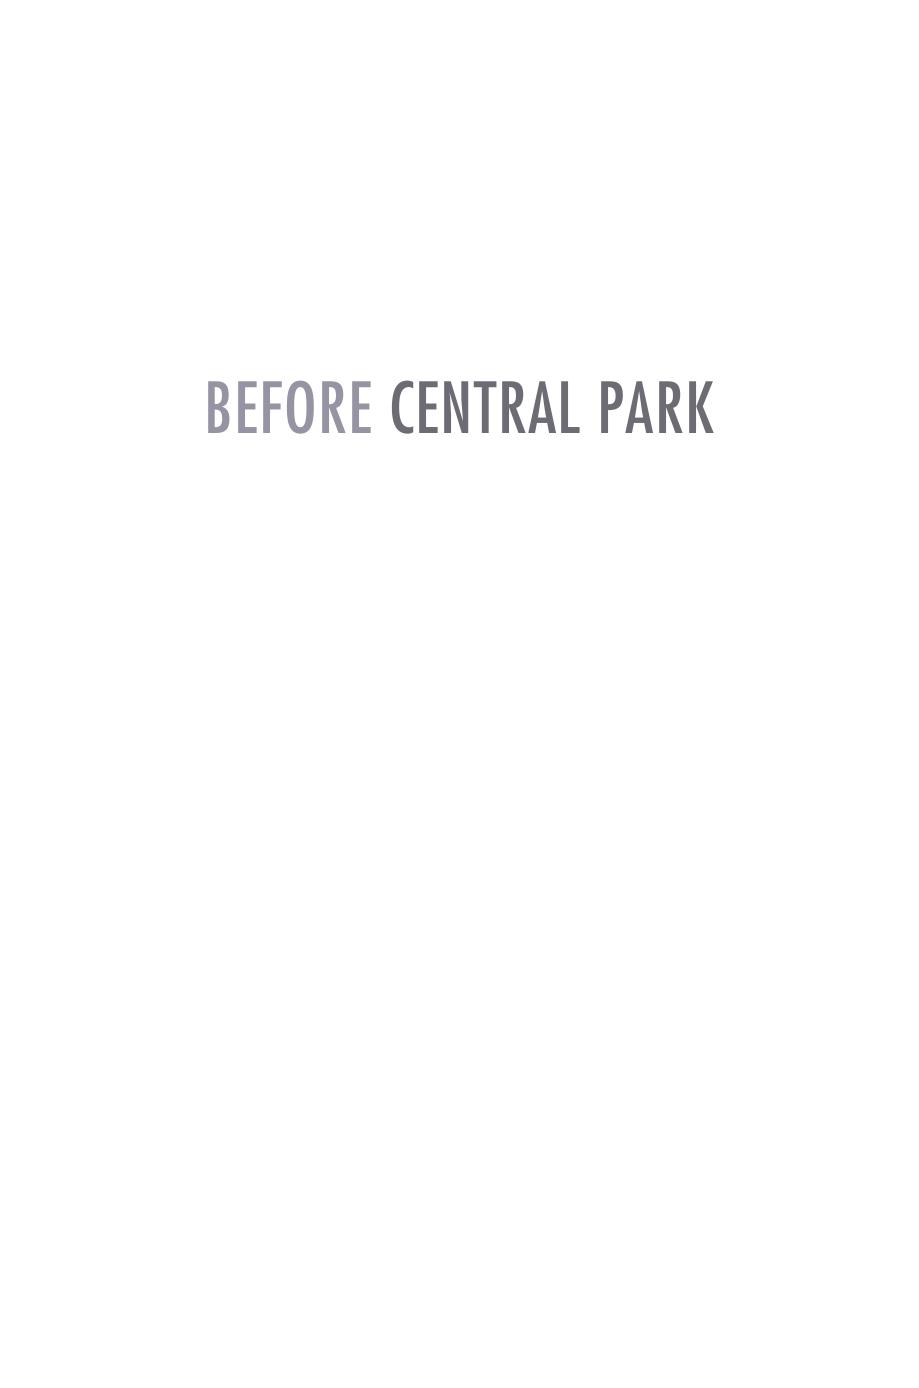 Before Central Park by Sara Cedar Miller